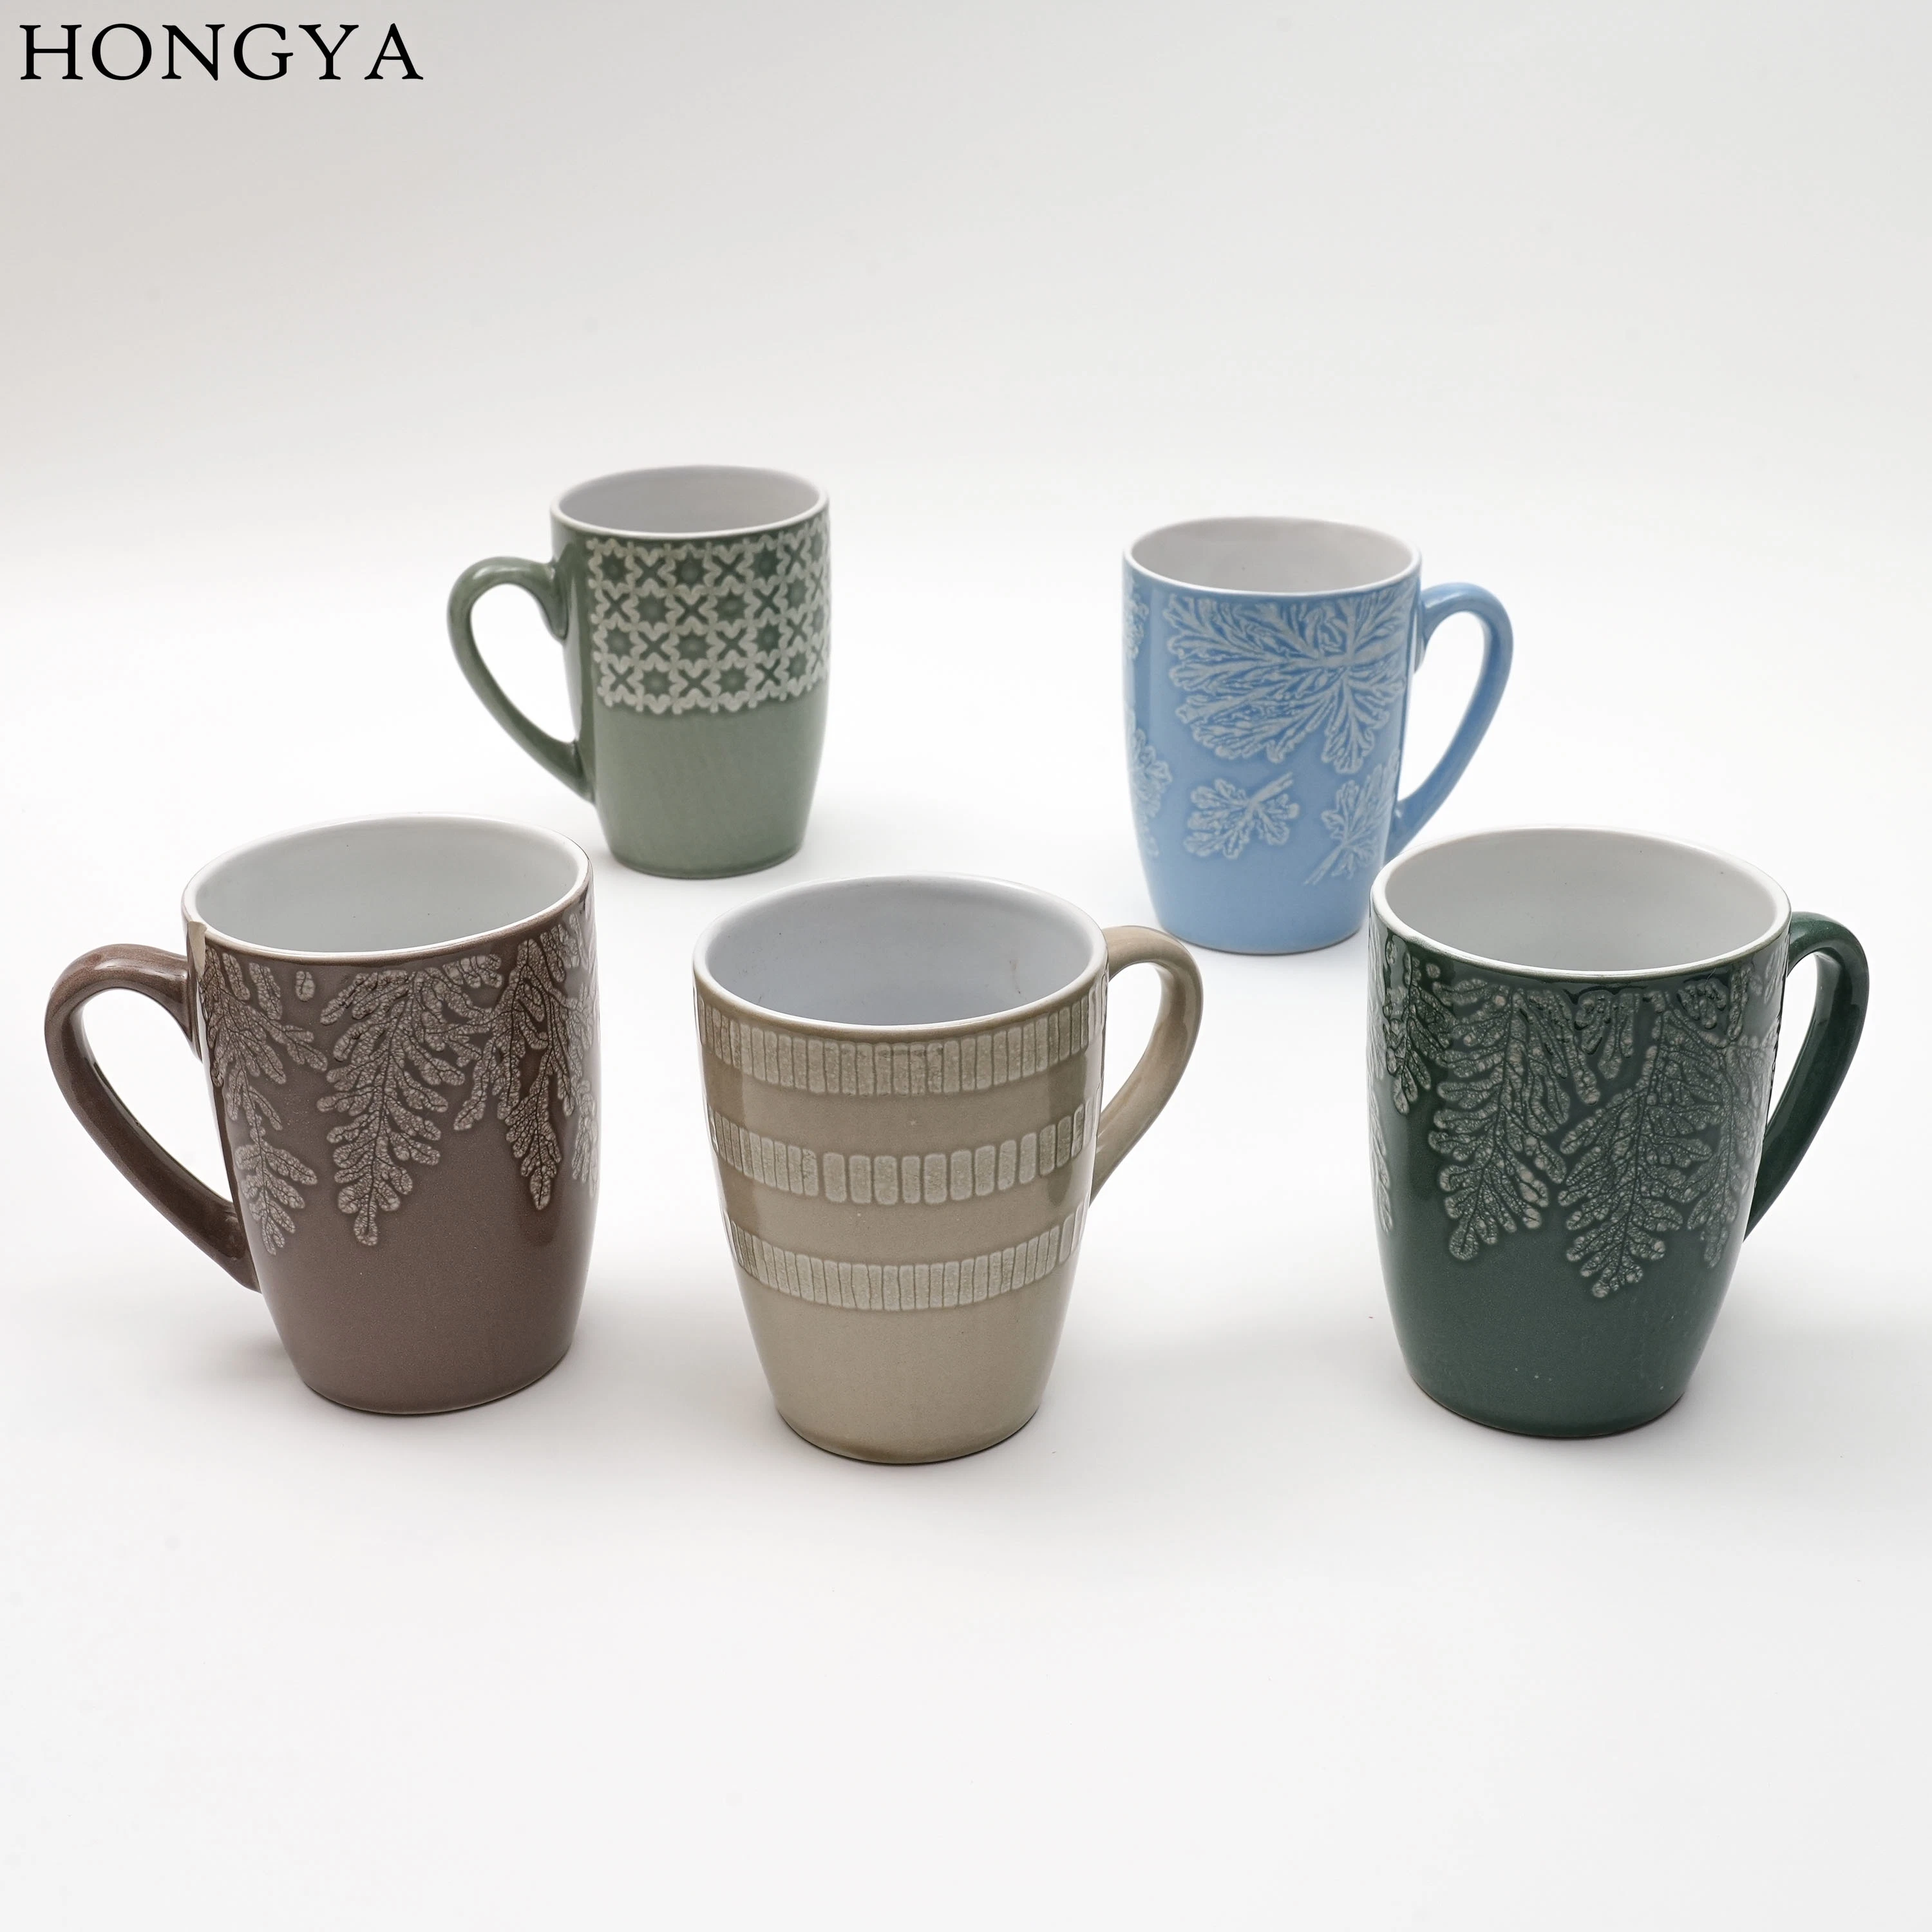 Set of 5 Coffee Mugs for Tea, Milk, Hot Cocoa, Multicolor